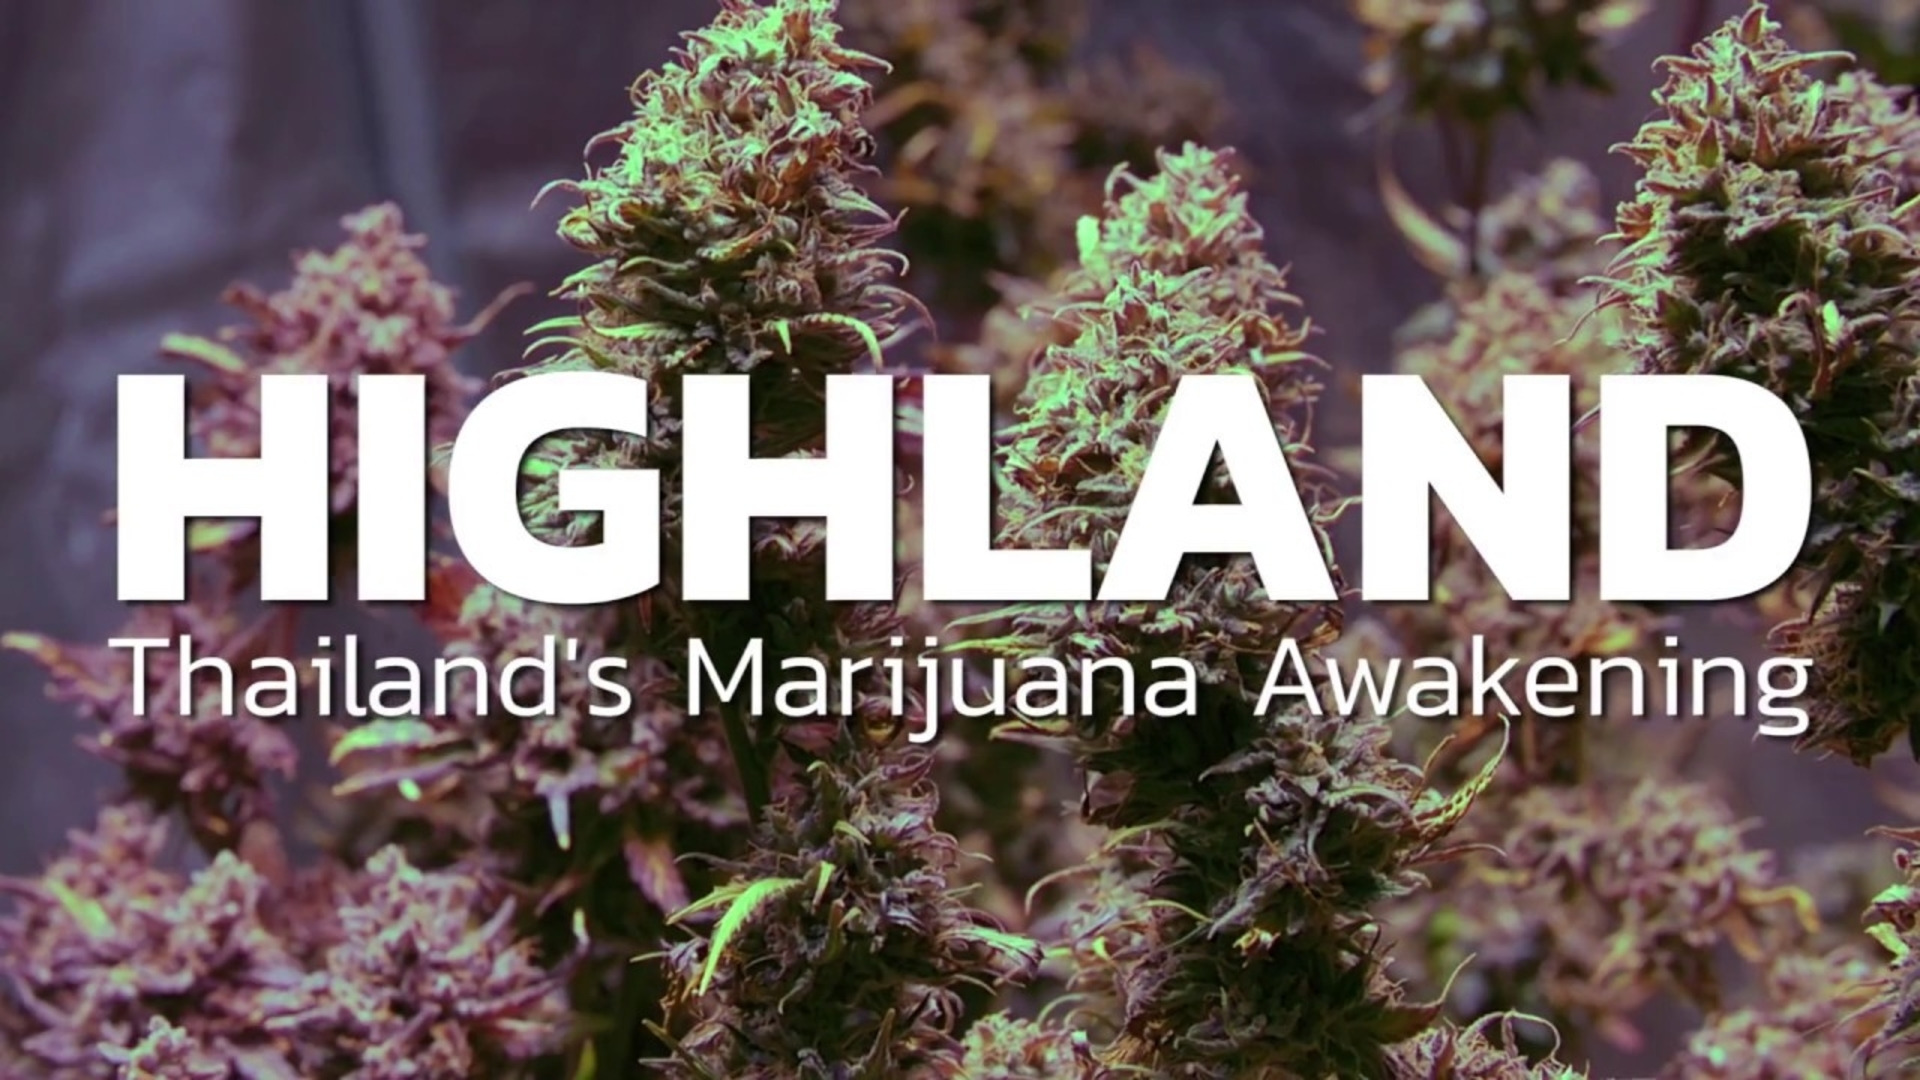 Show Highland: Thailand's Marijuana Awakening